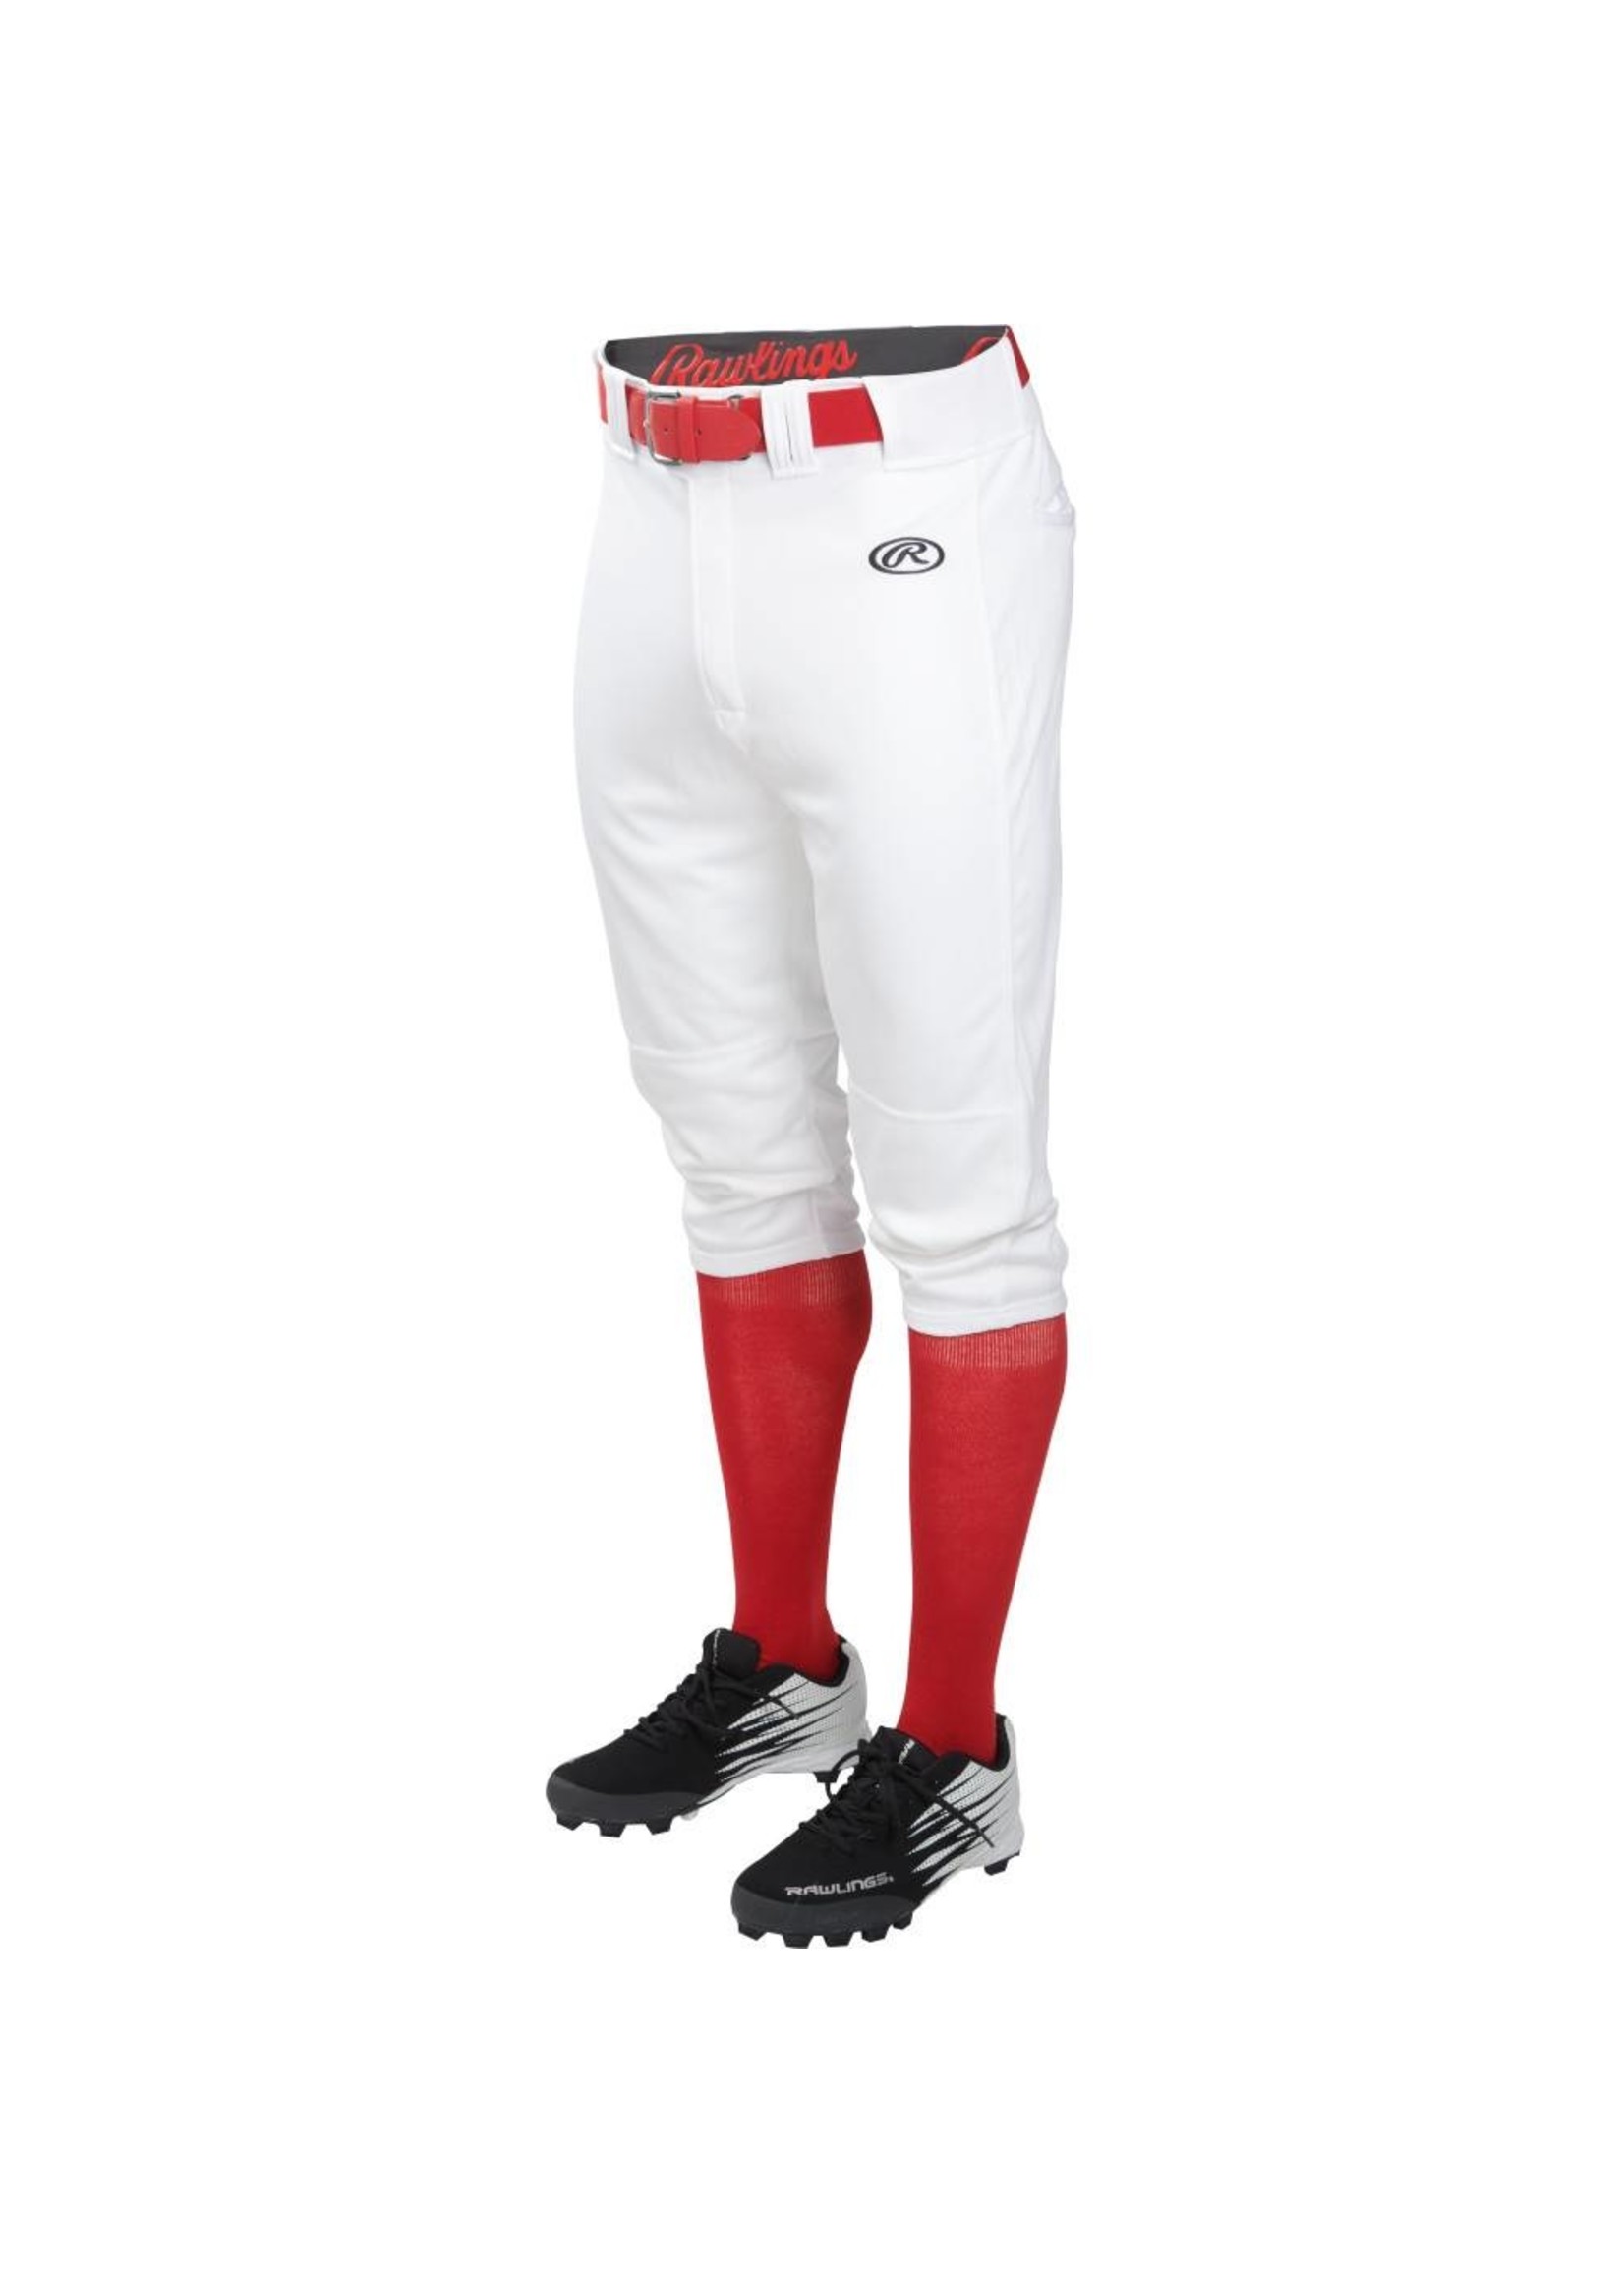 Rawlings Men Launch Knicker Pantalons De Baseball 9046